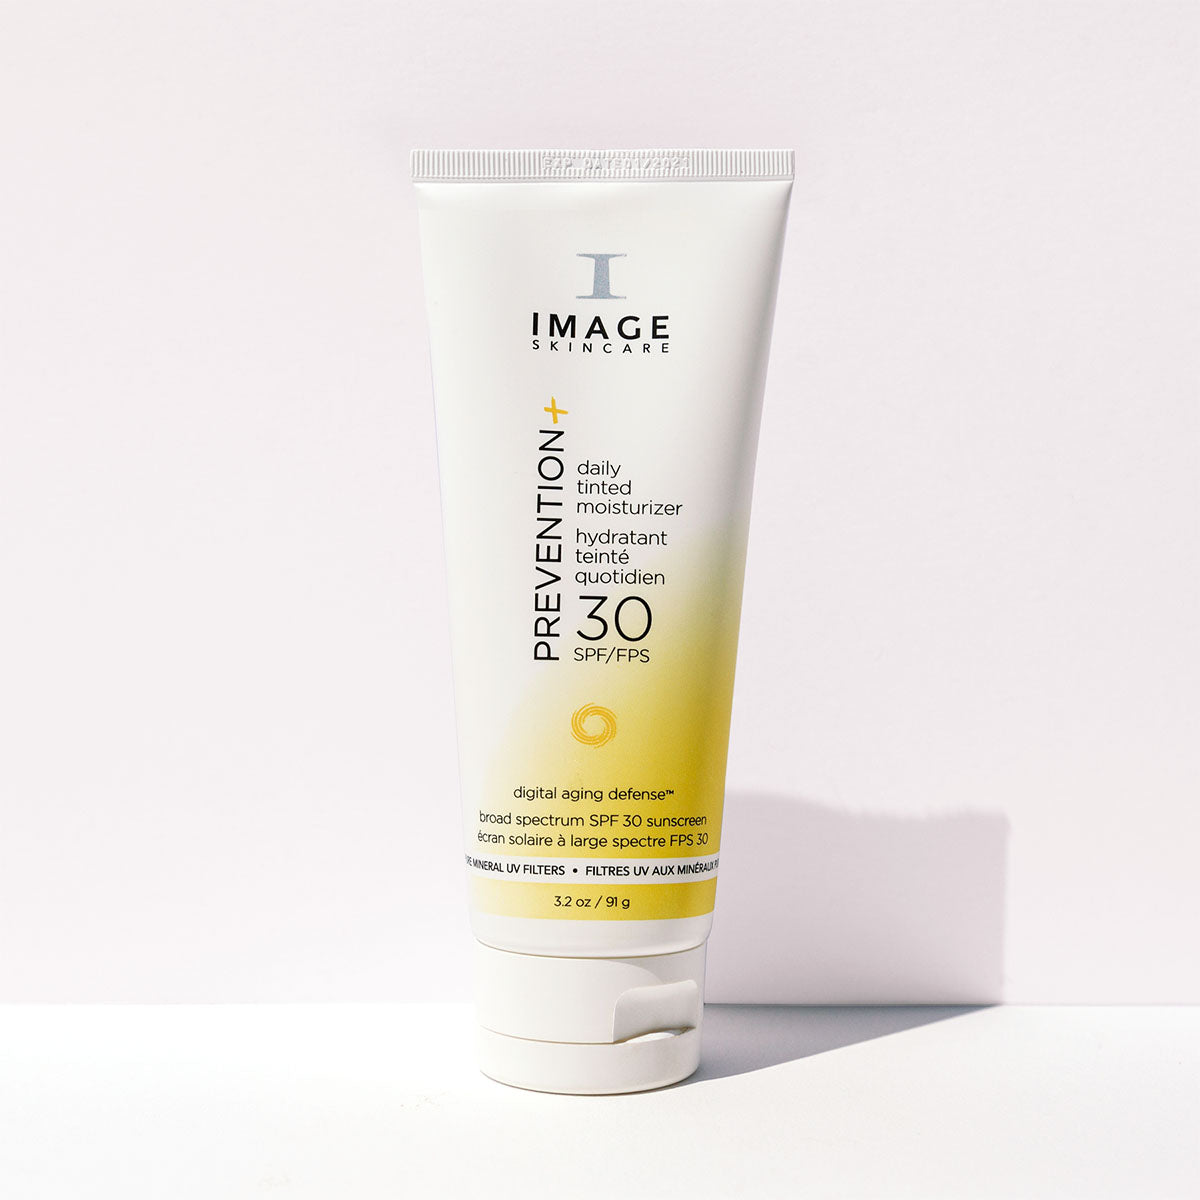 PREVENTION+ daily tinted moisturizer SPF 30 | IMAGE Skincare